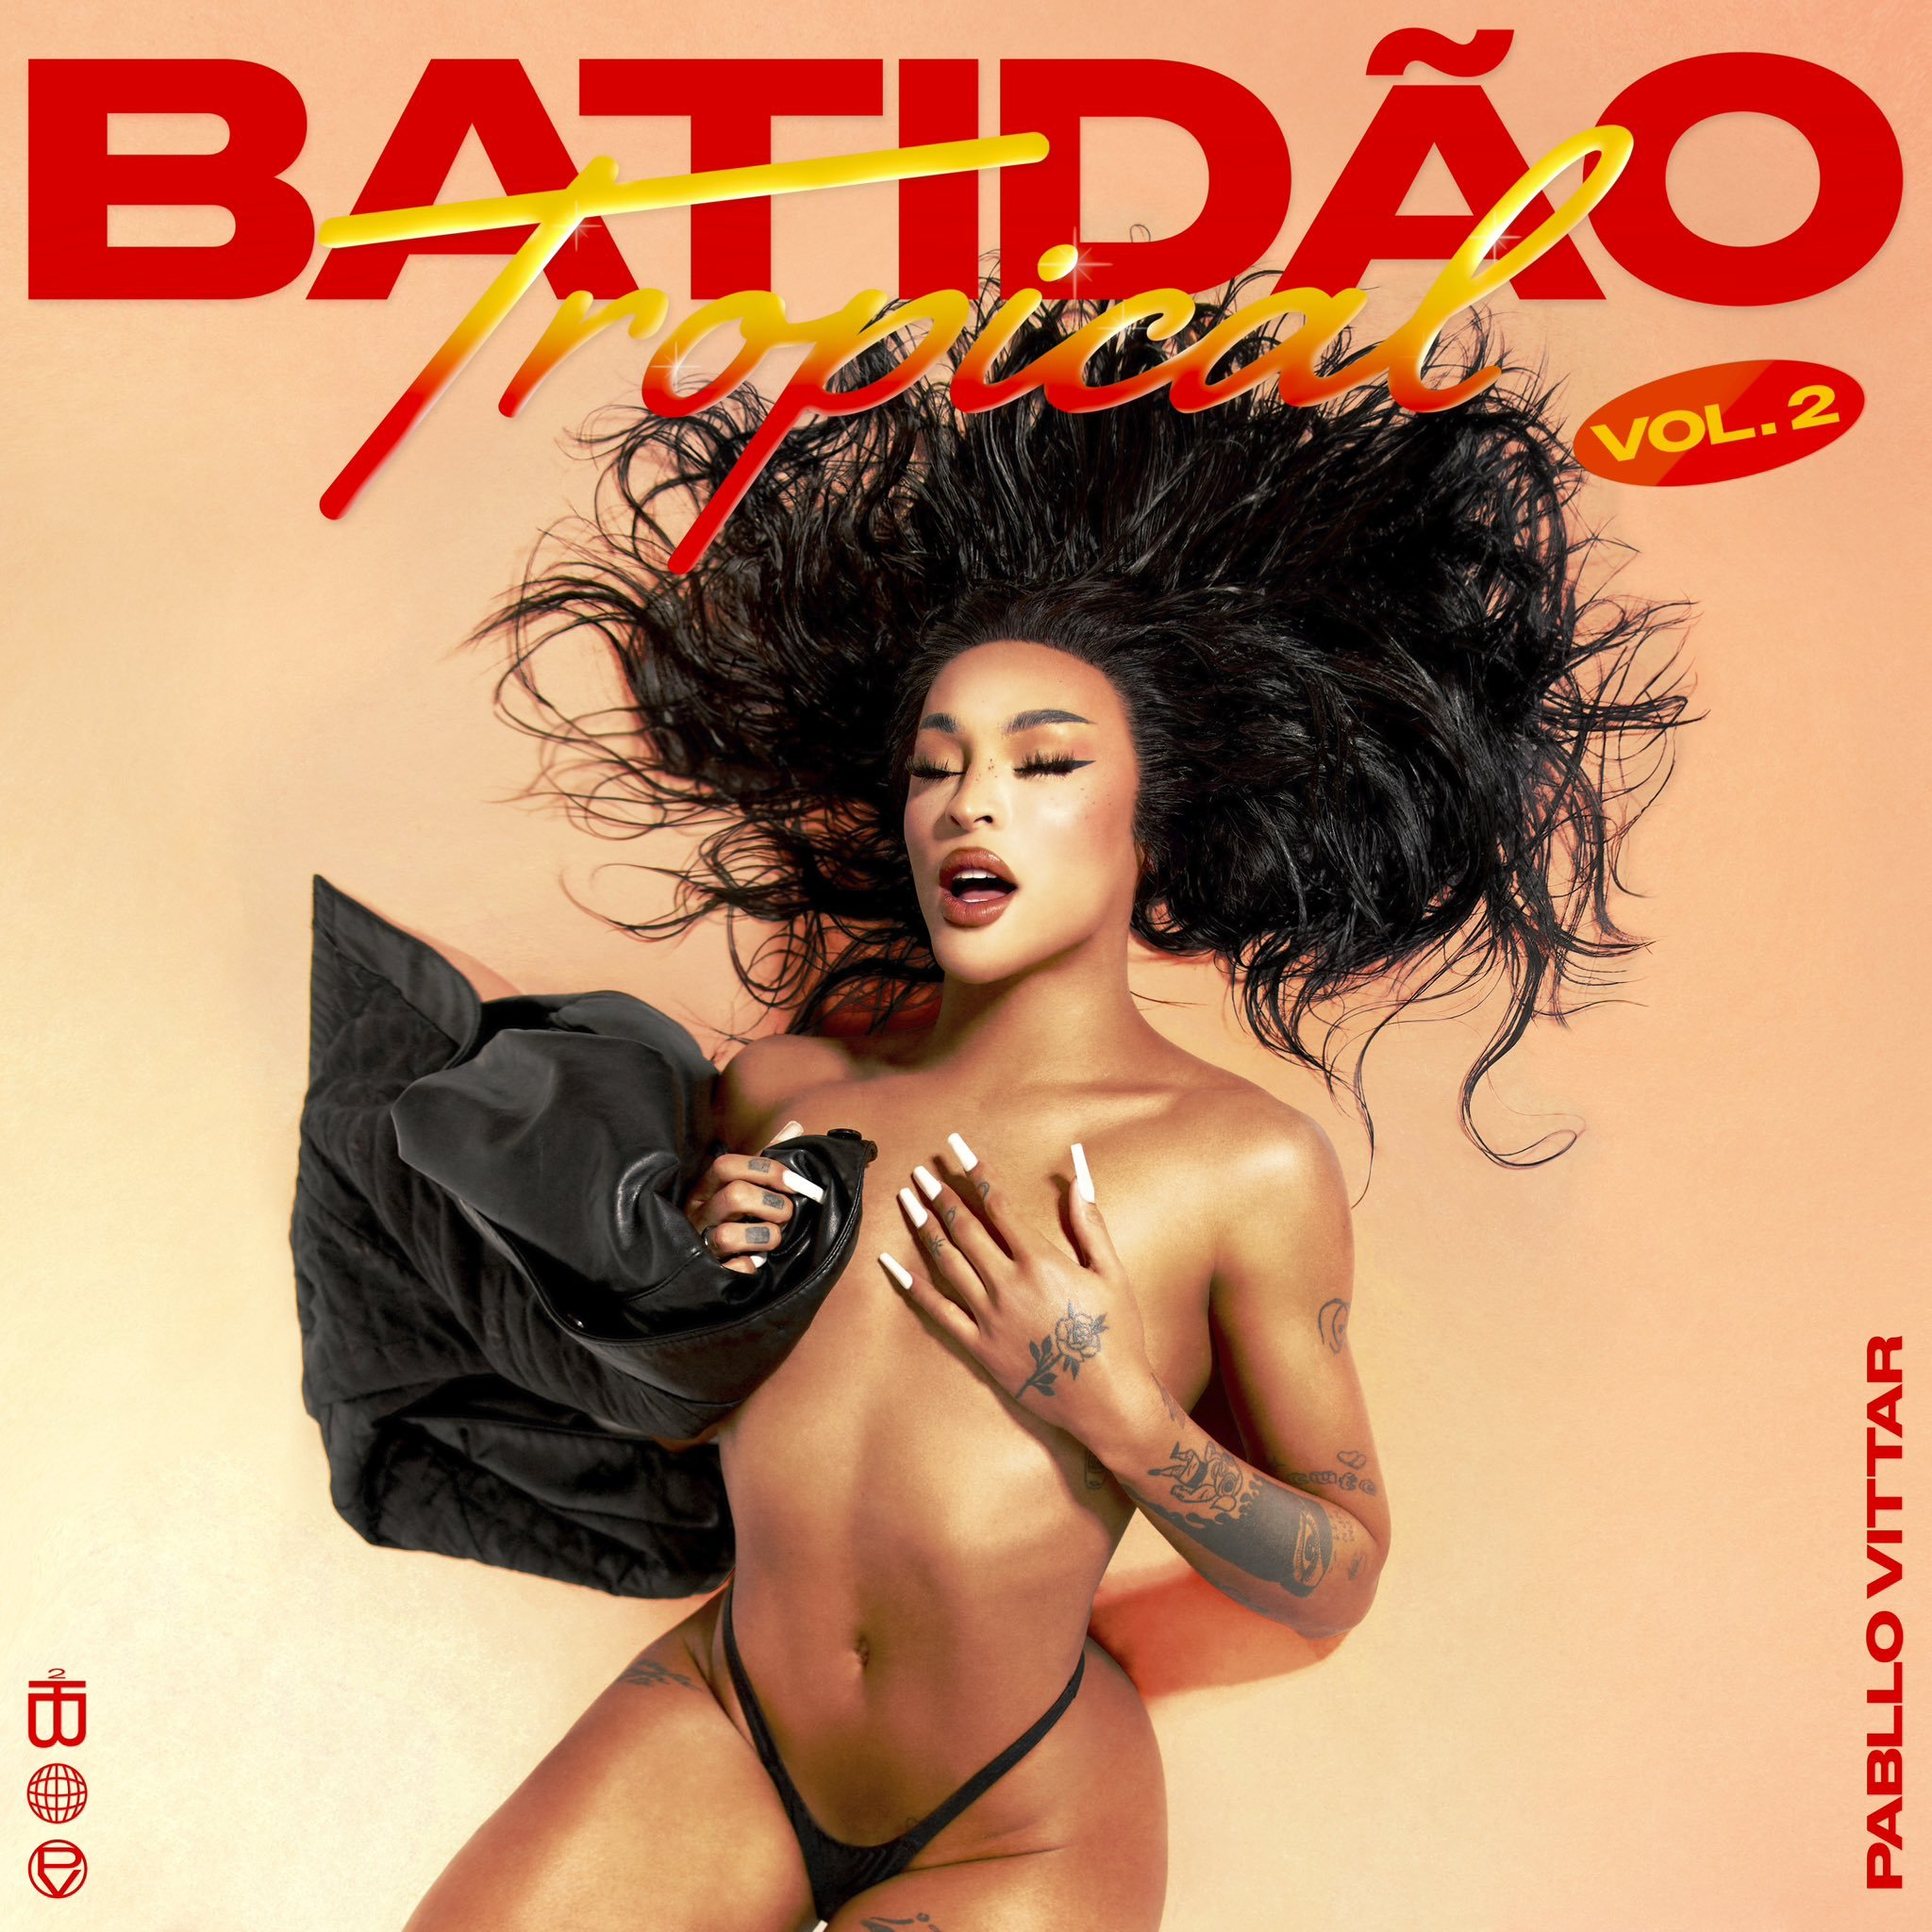 Pabllo Vittar & Taty Girl — Falta Coragem cover artwork